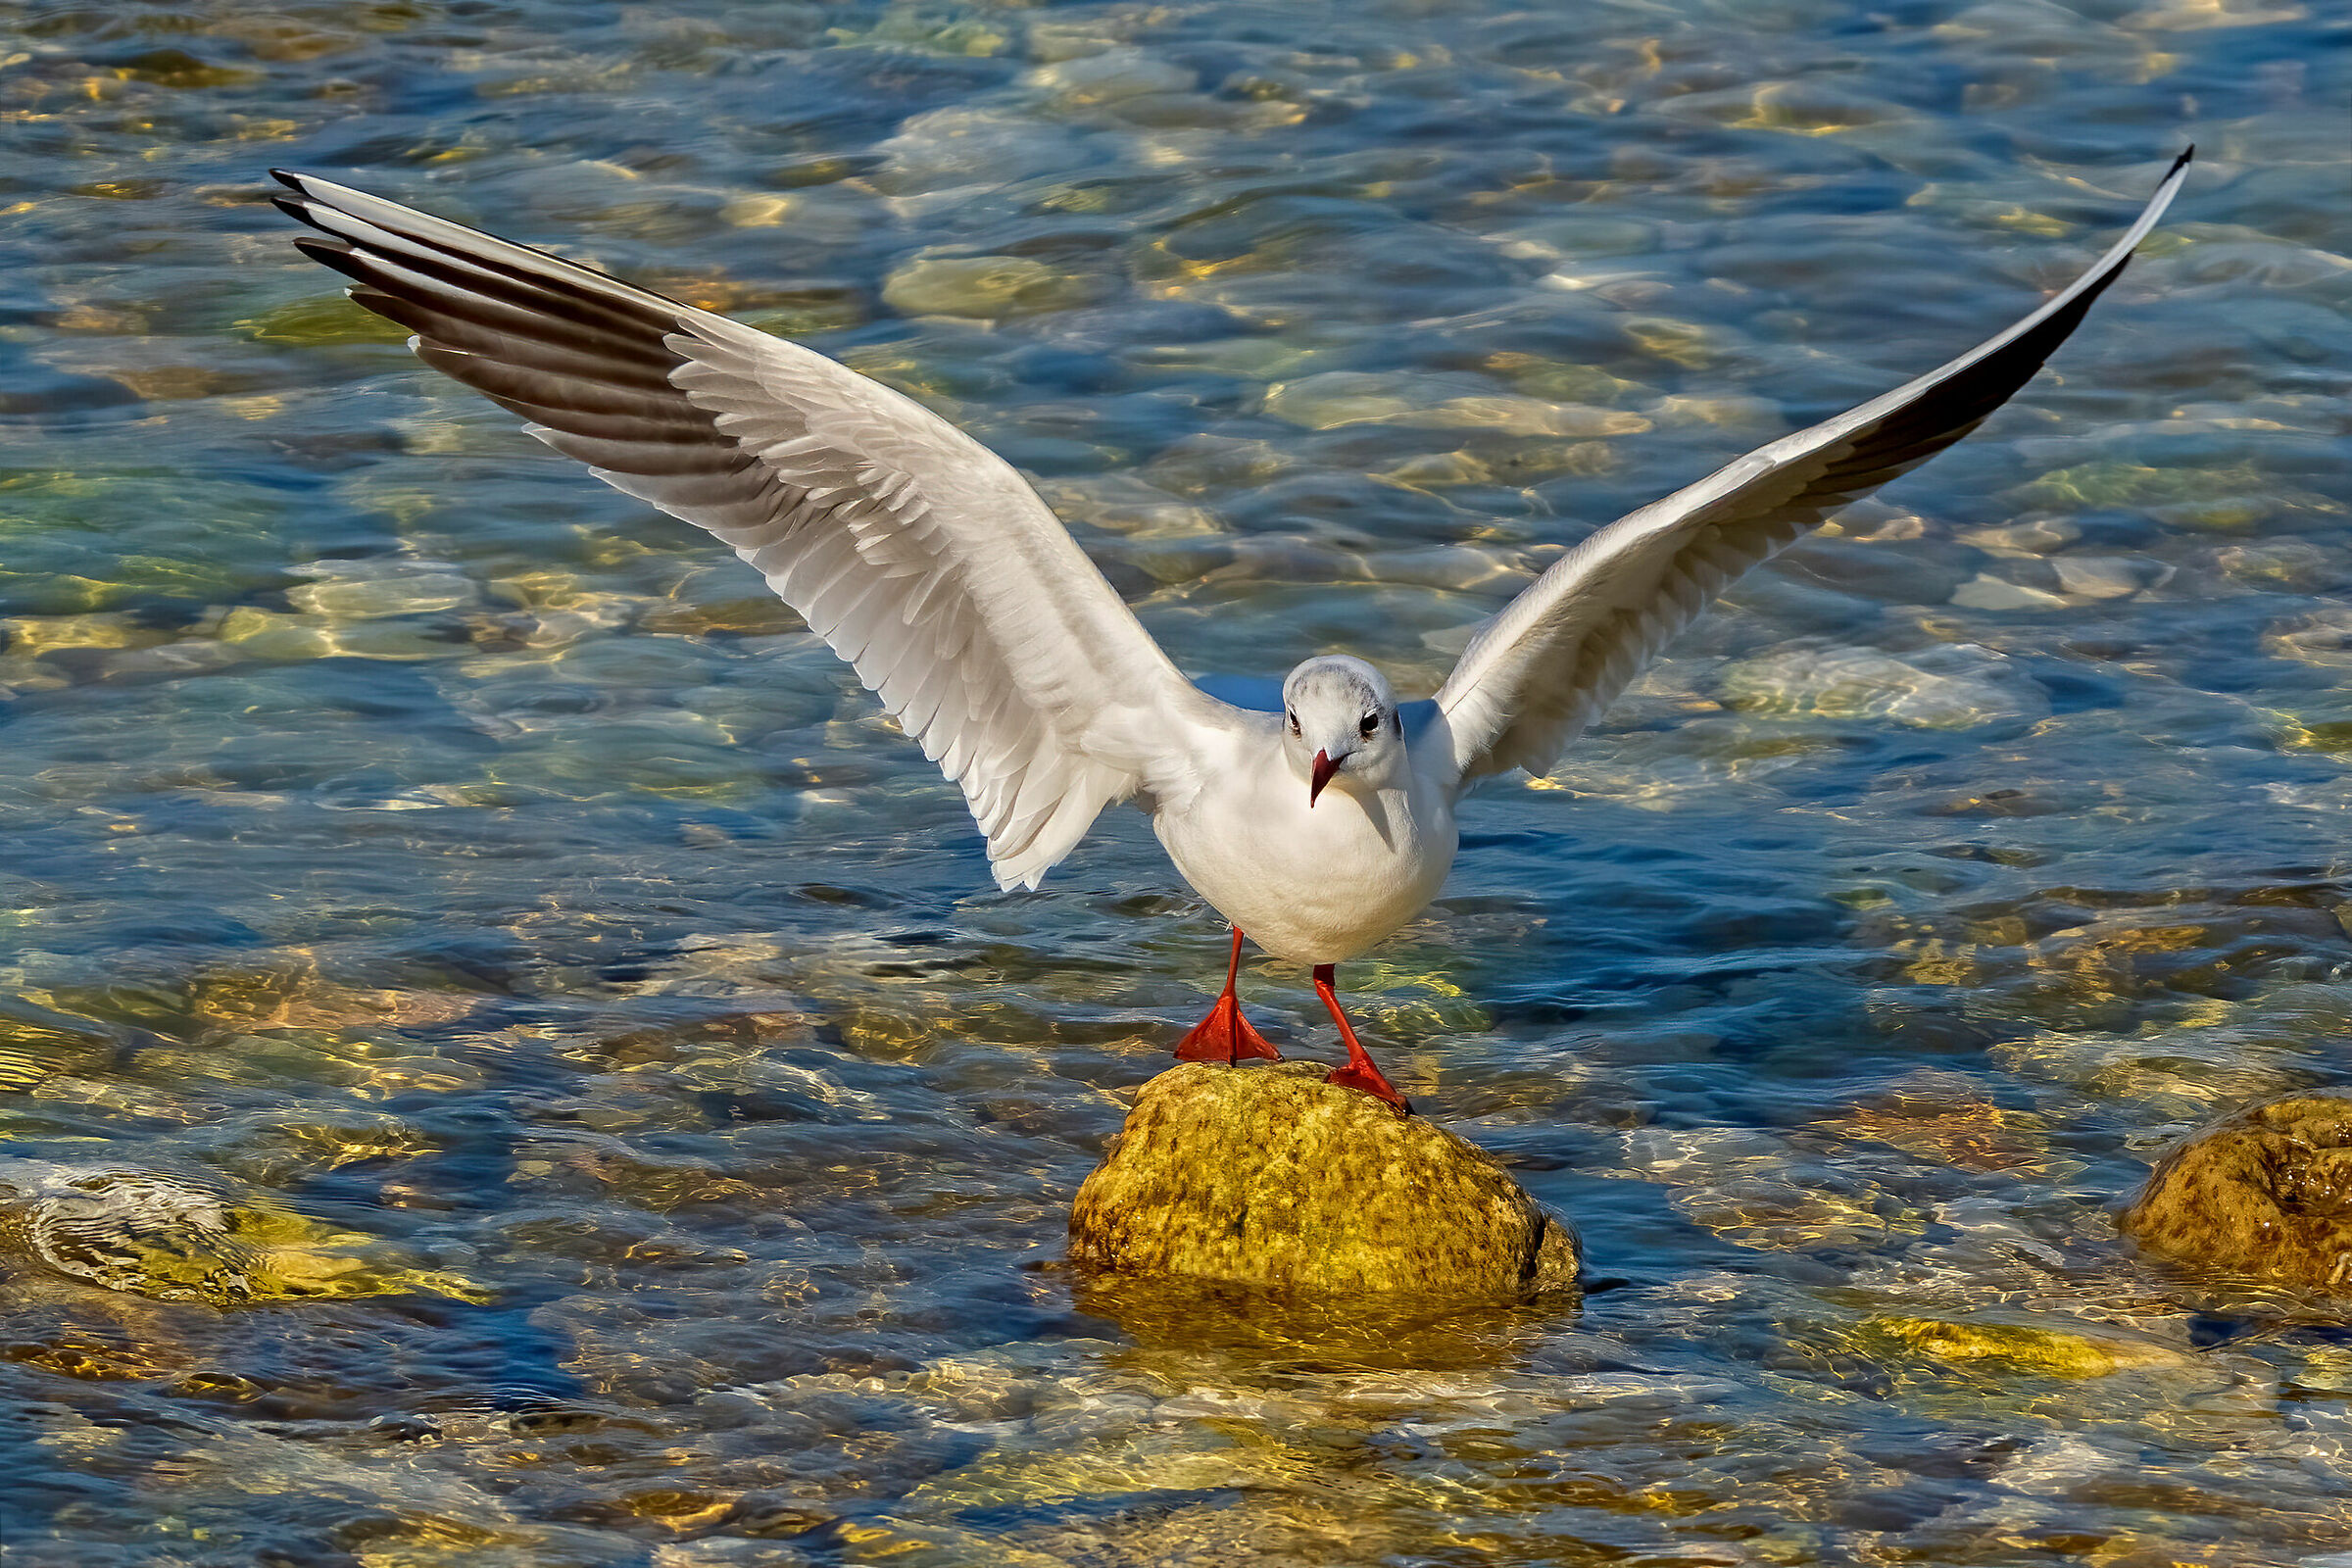 Perfect landing seagull...